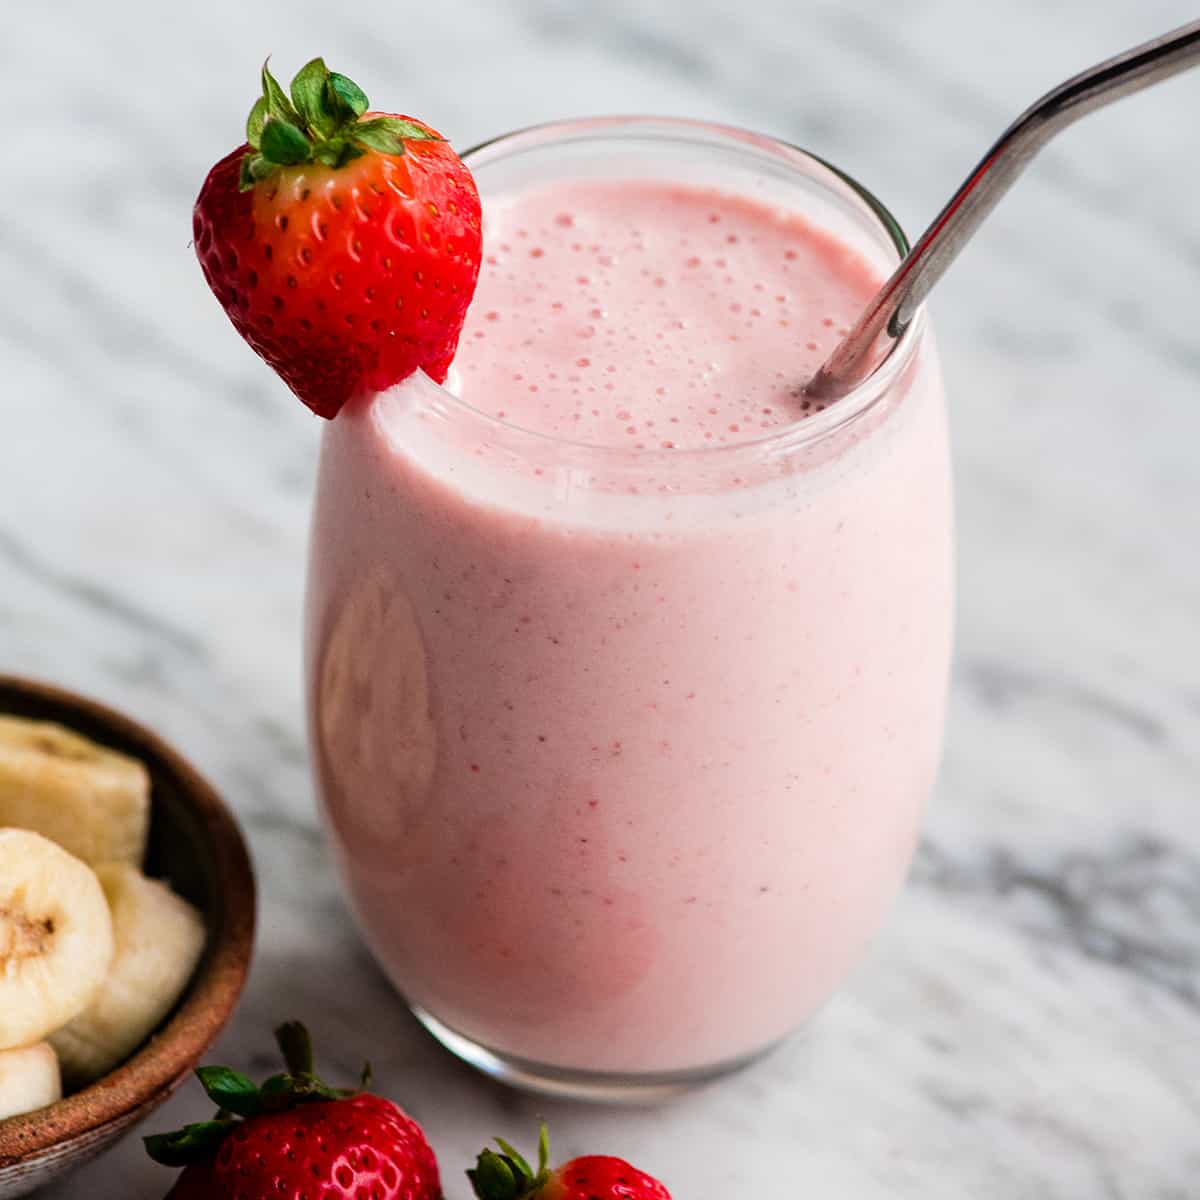 Healthy Smoothie Recipes strawberry banana smoothie